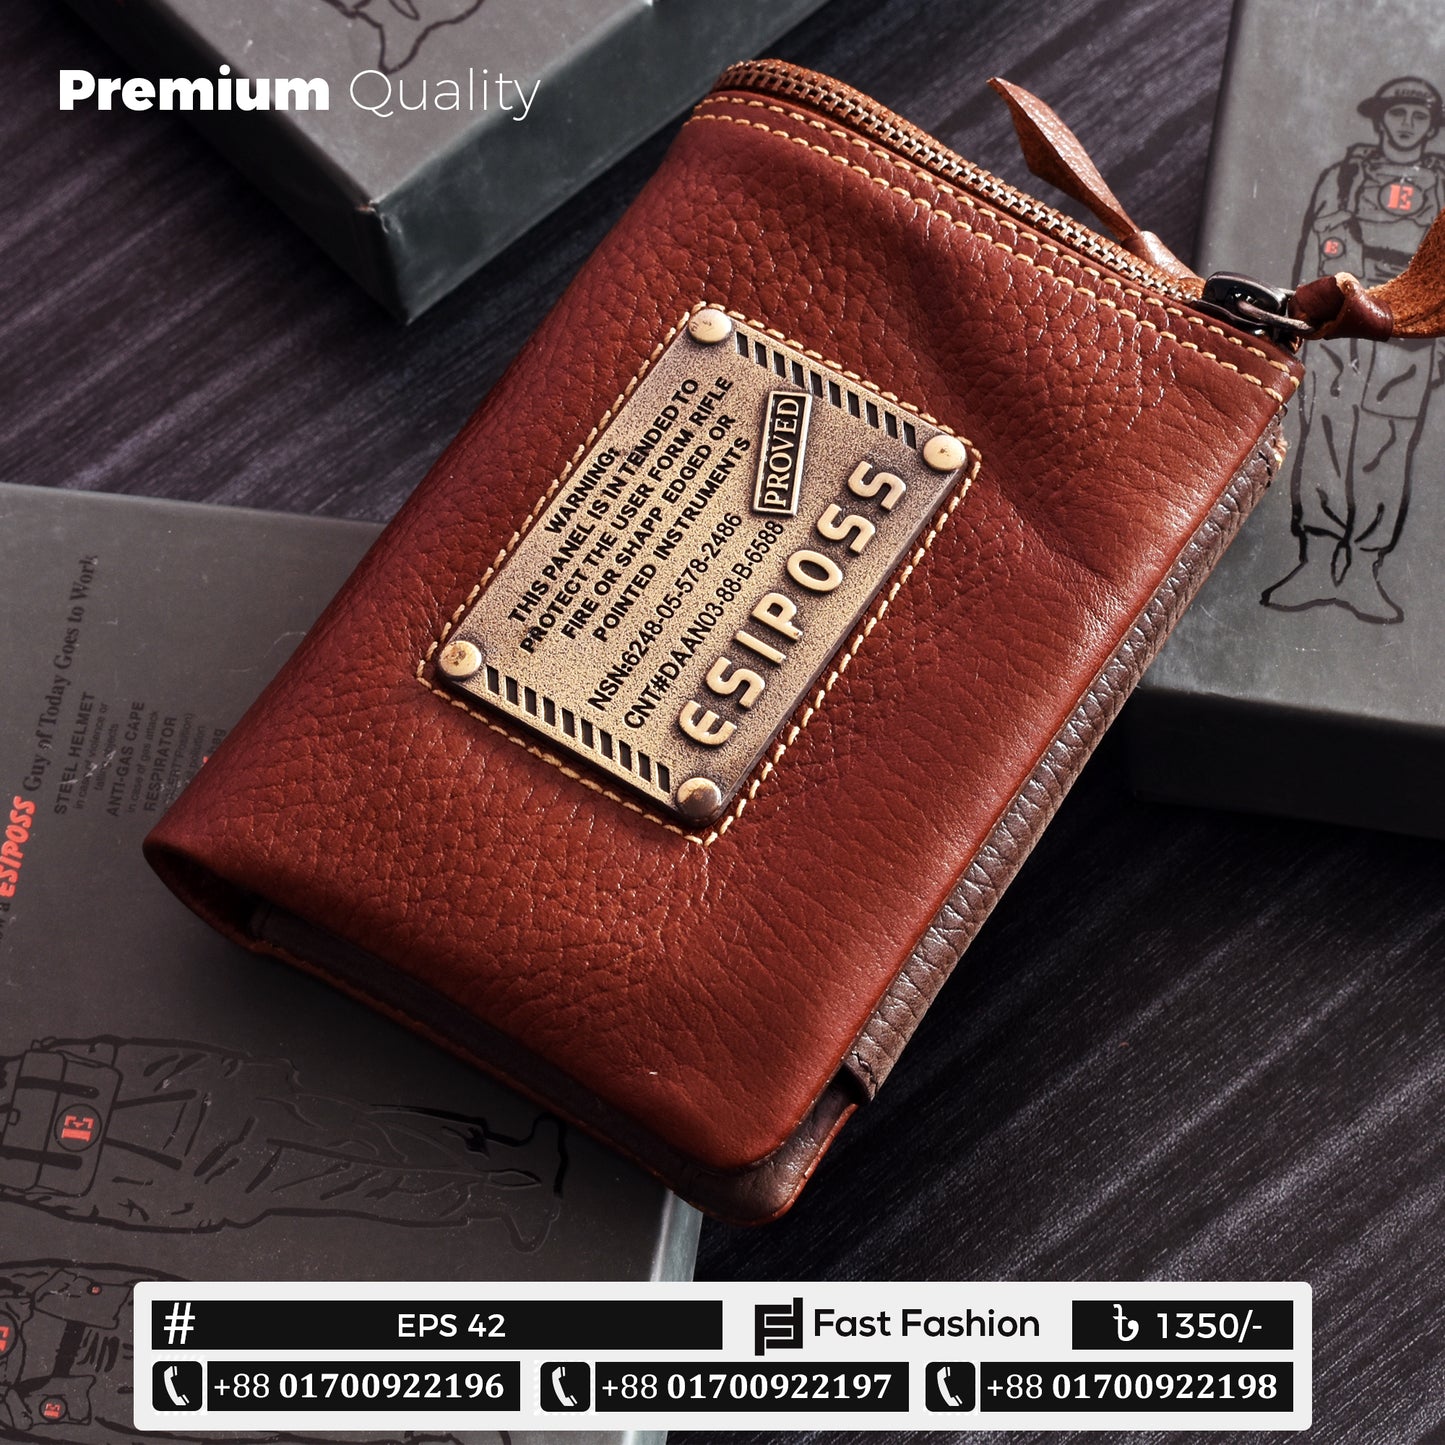 Original Esiposs Leather Wallet | Pocket Size Wallet | EPS 42